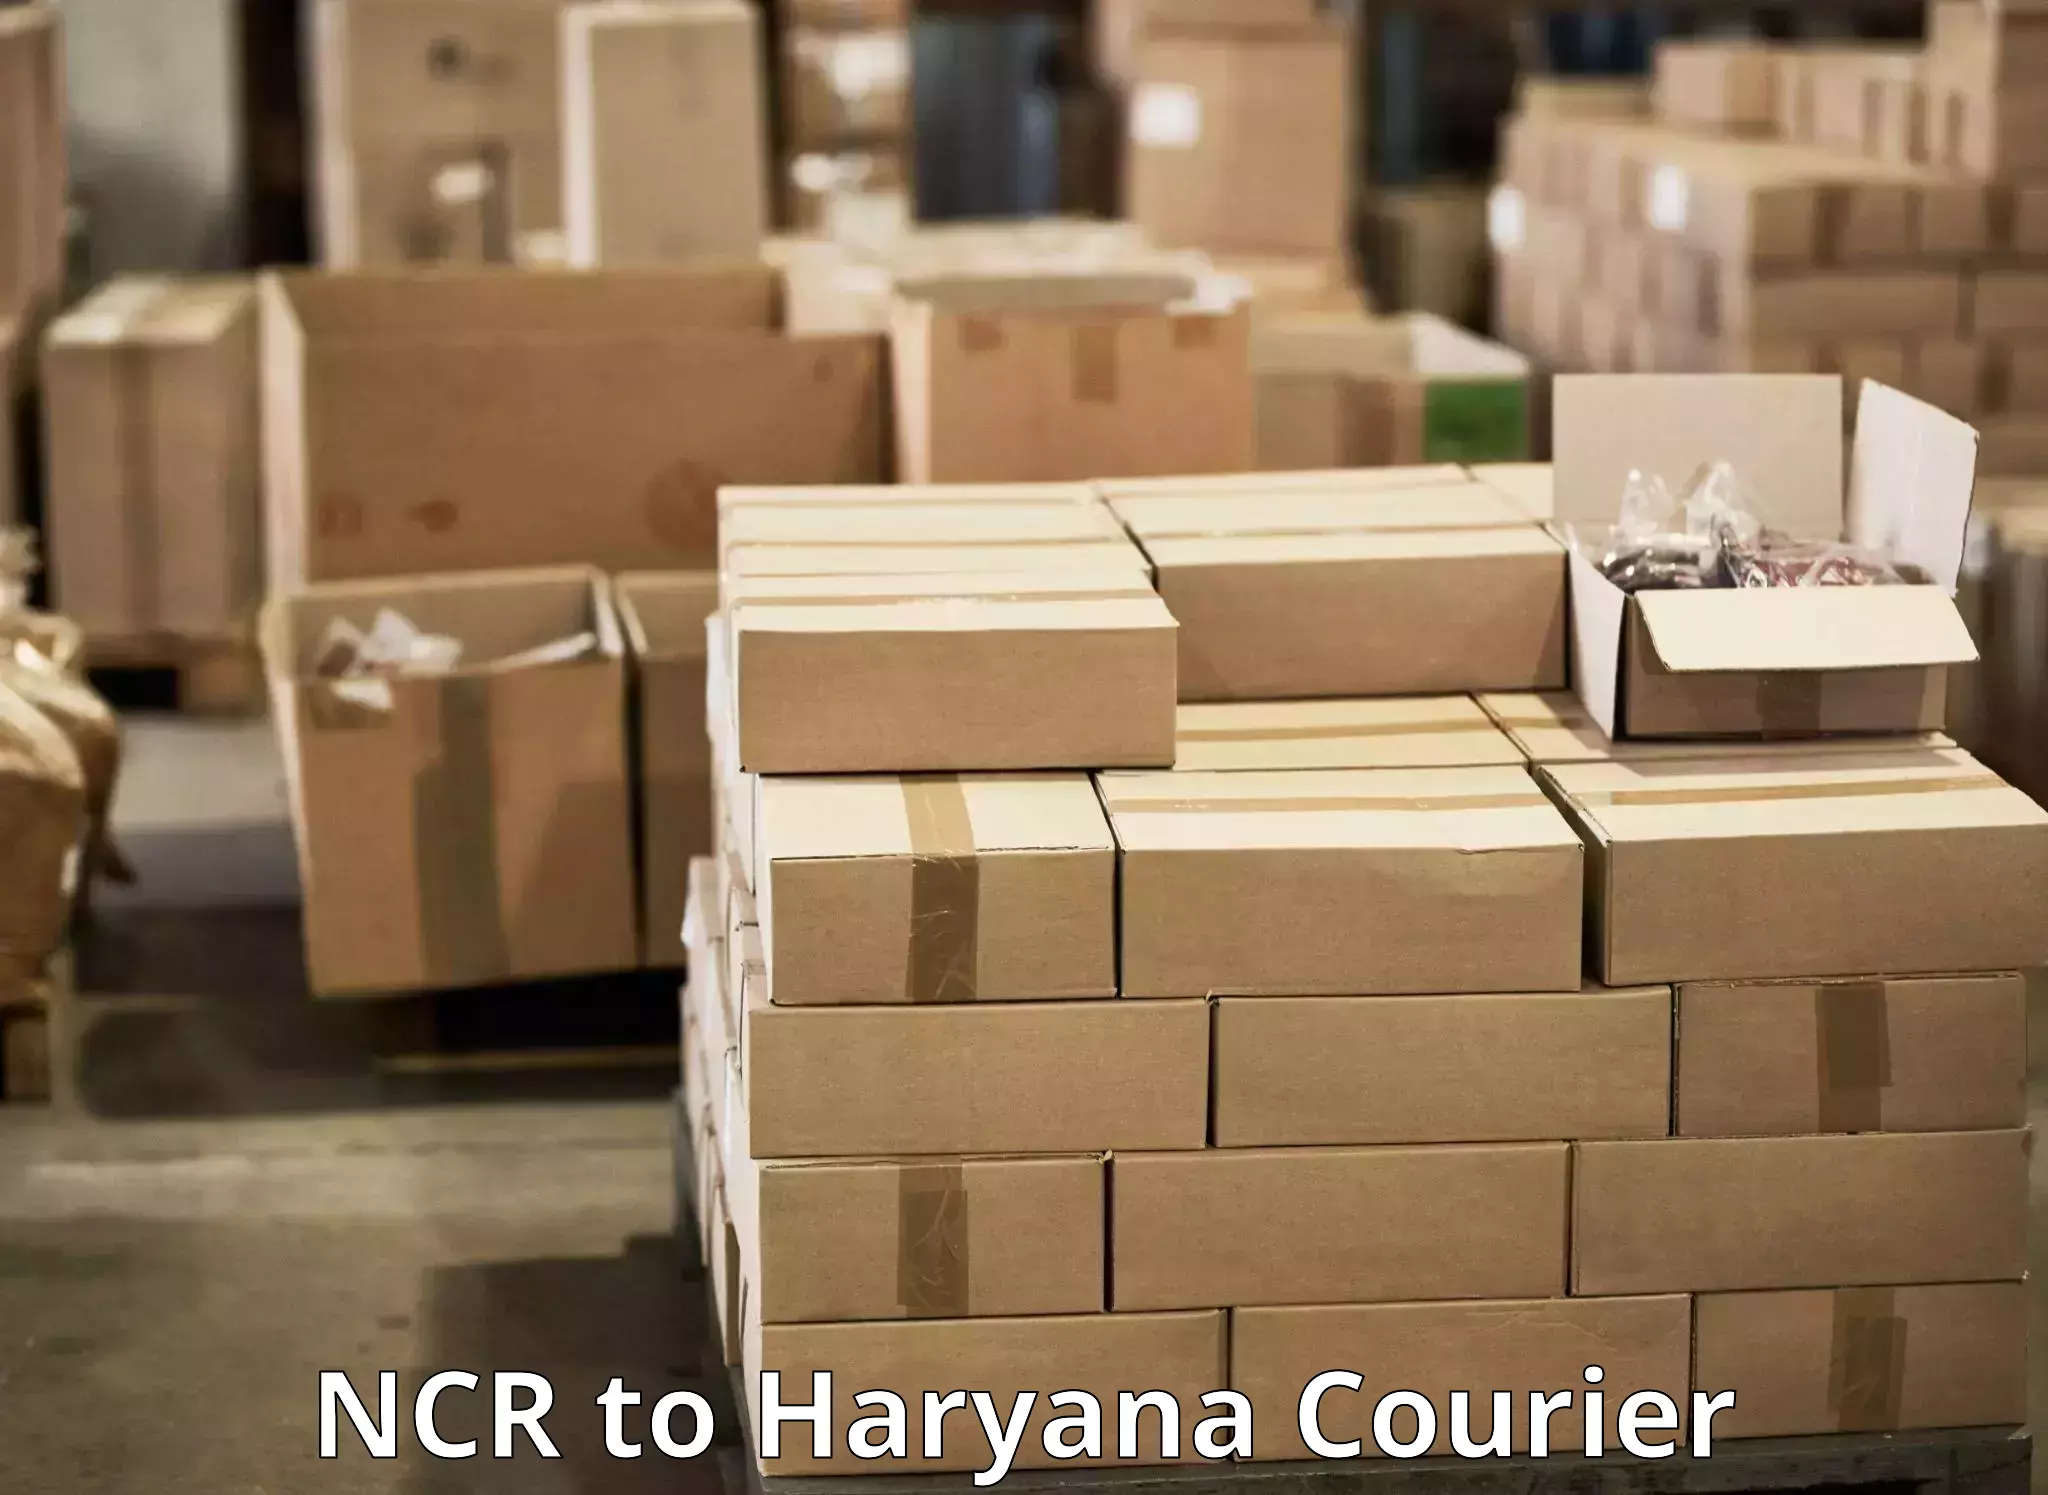 Express postal services NCR to NCR Haryana